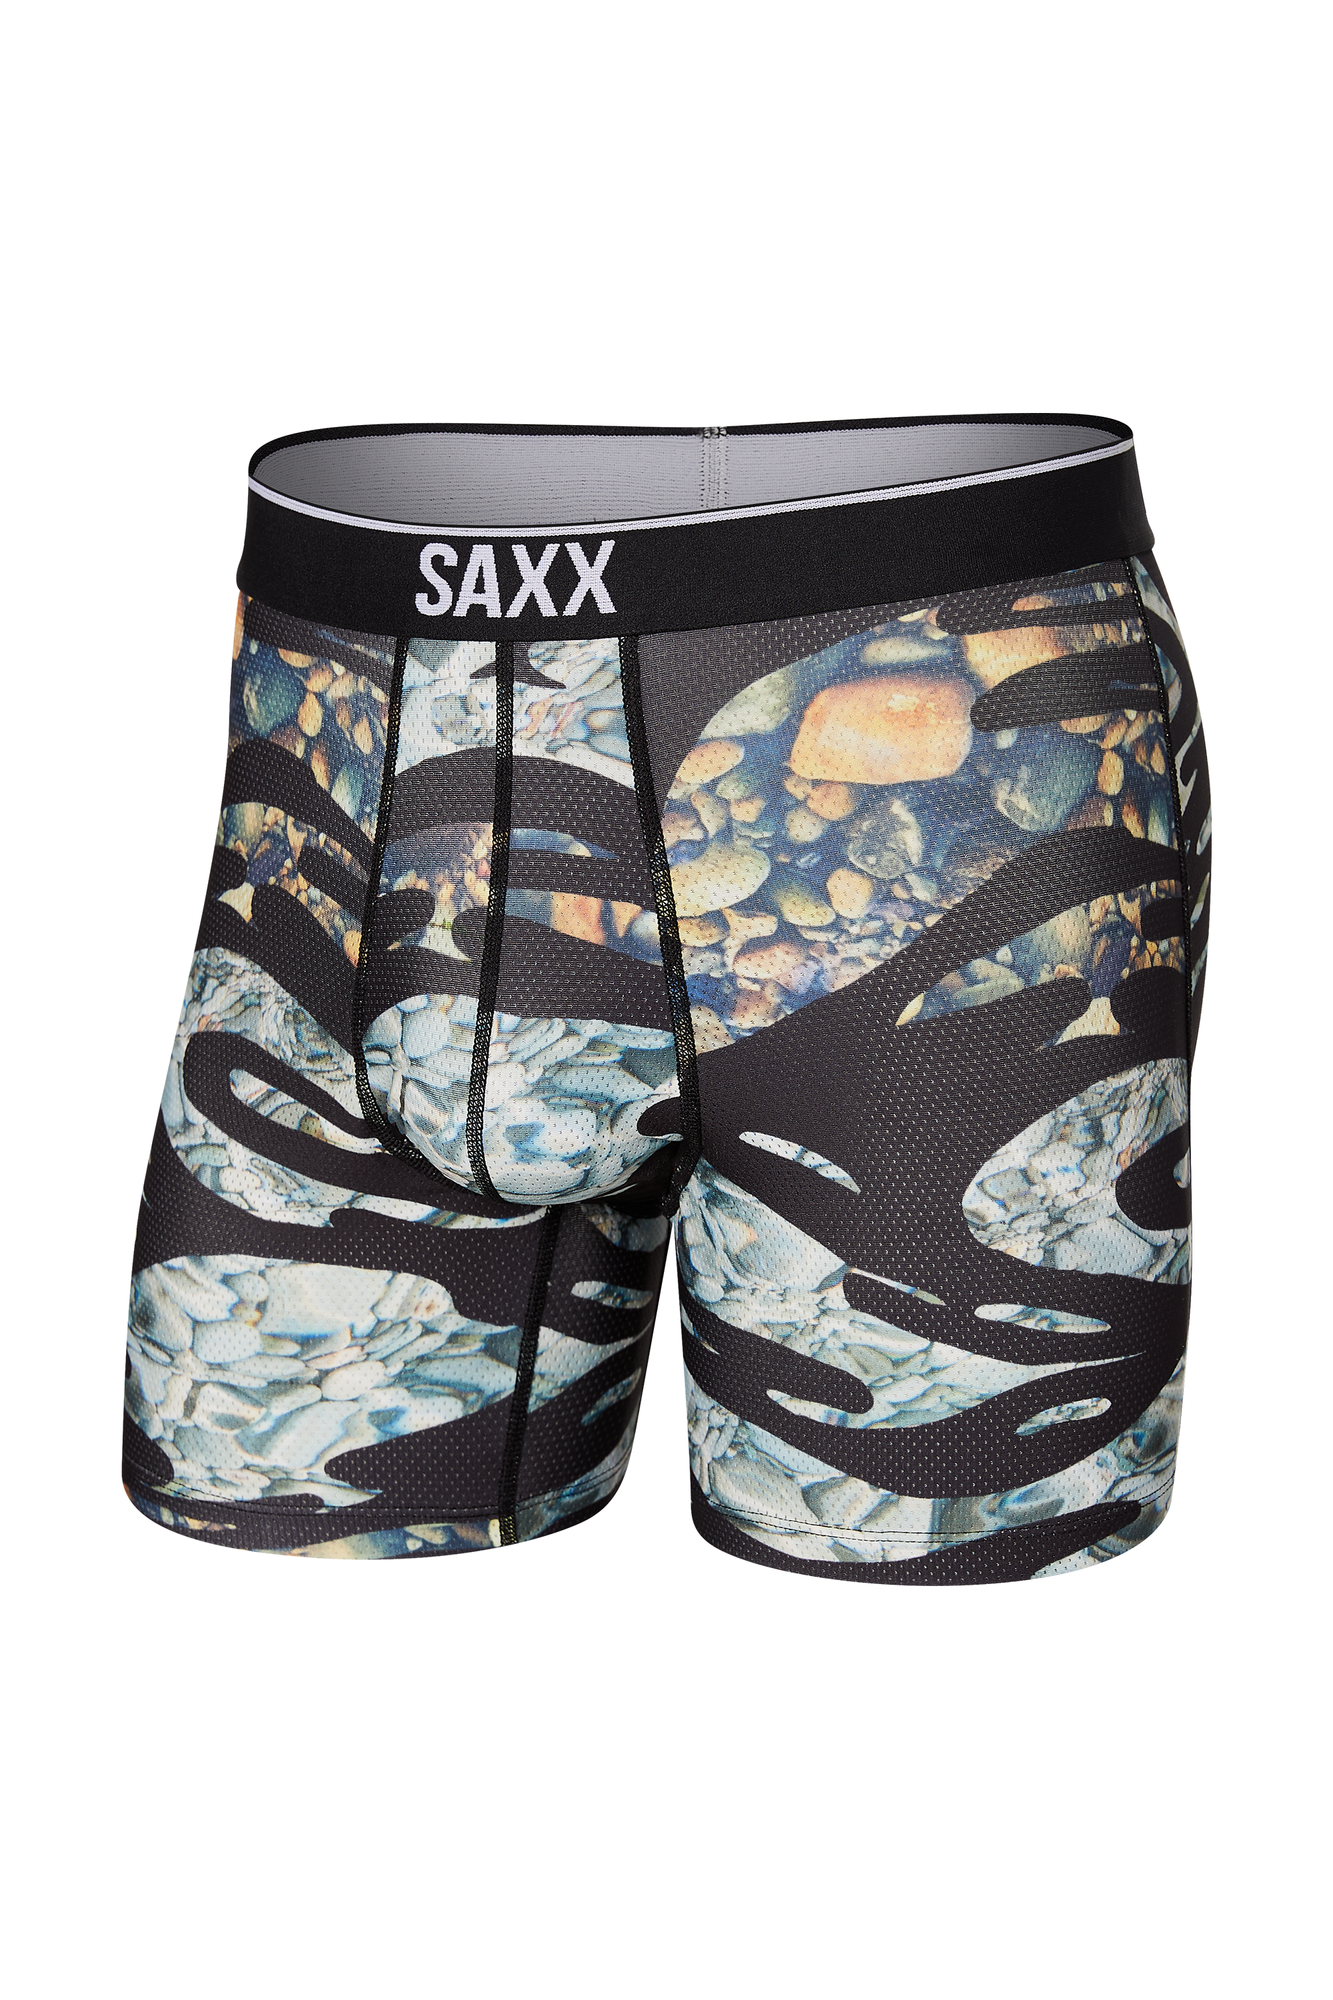 Saxx Volt Sport Boxer Brief - Style SXBB29-RCC, front